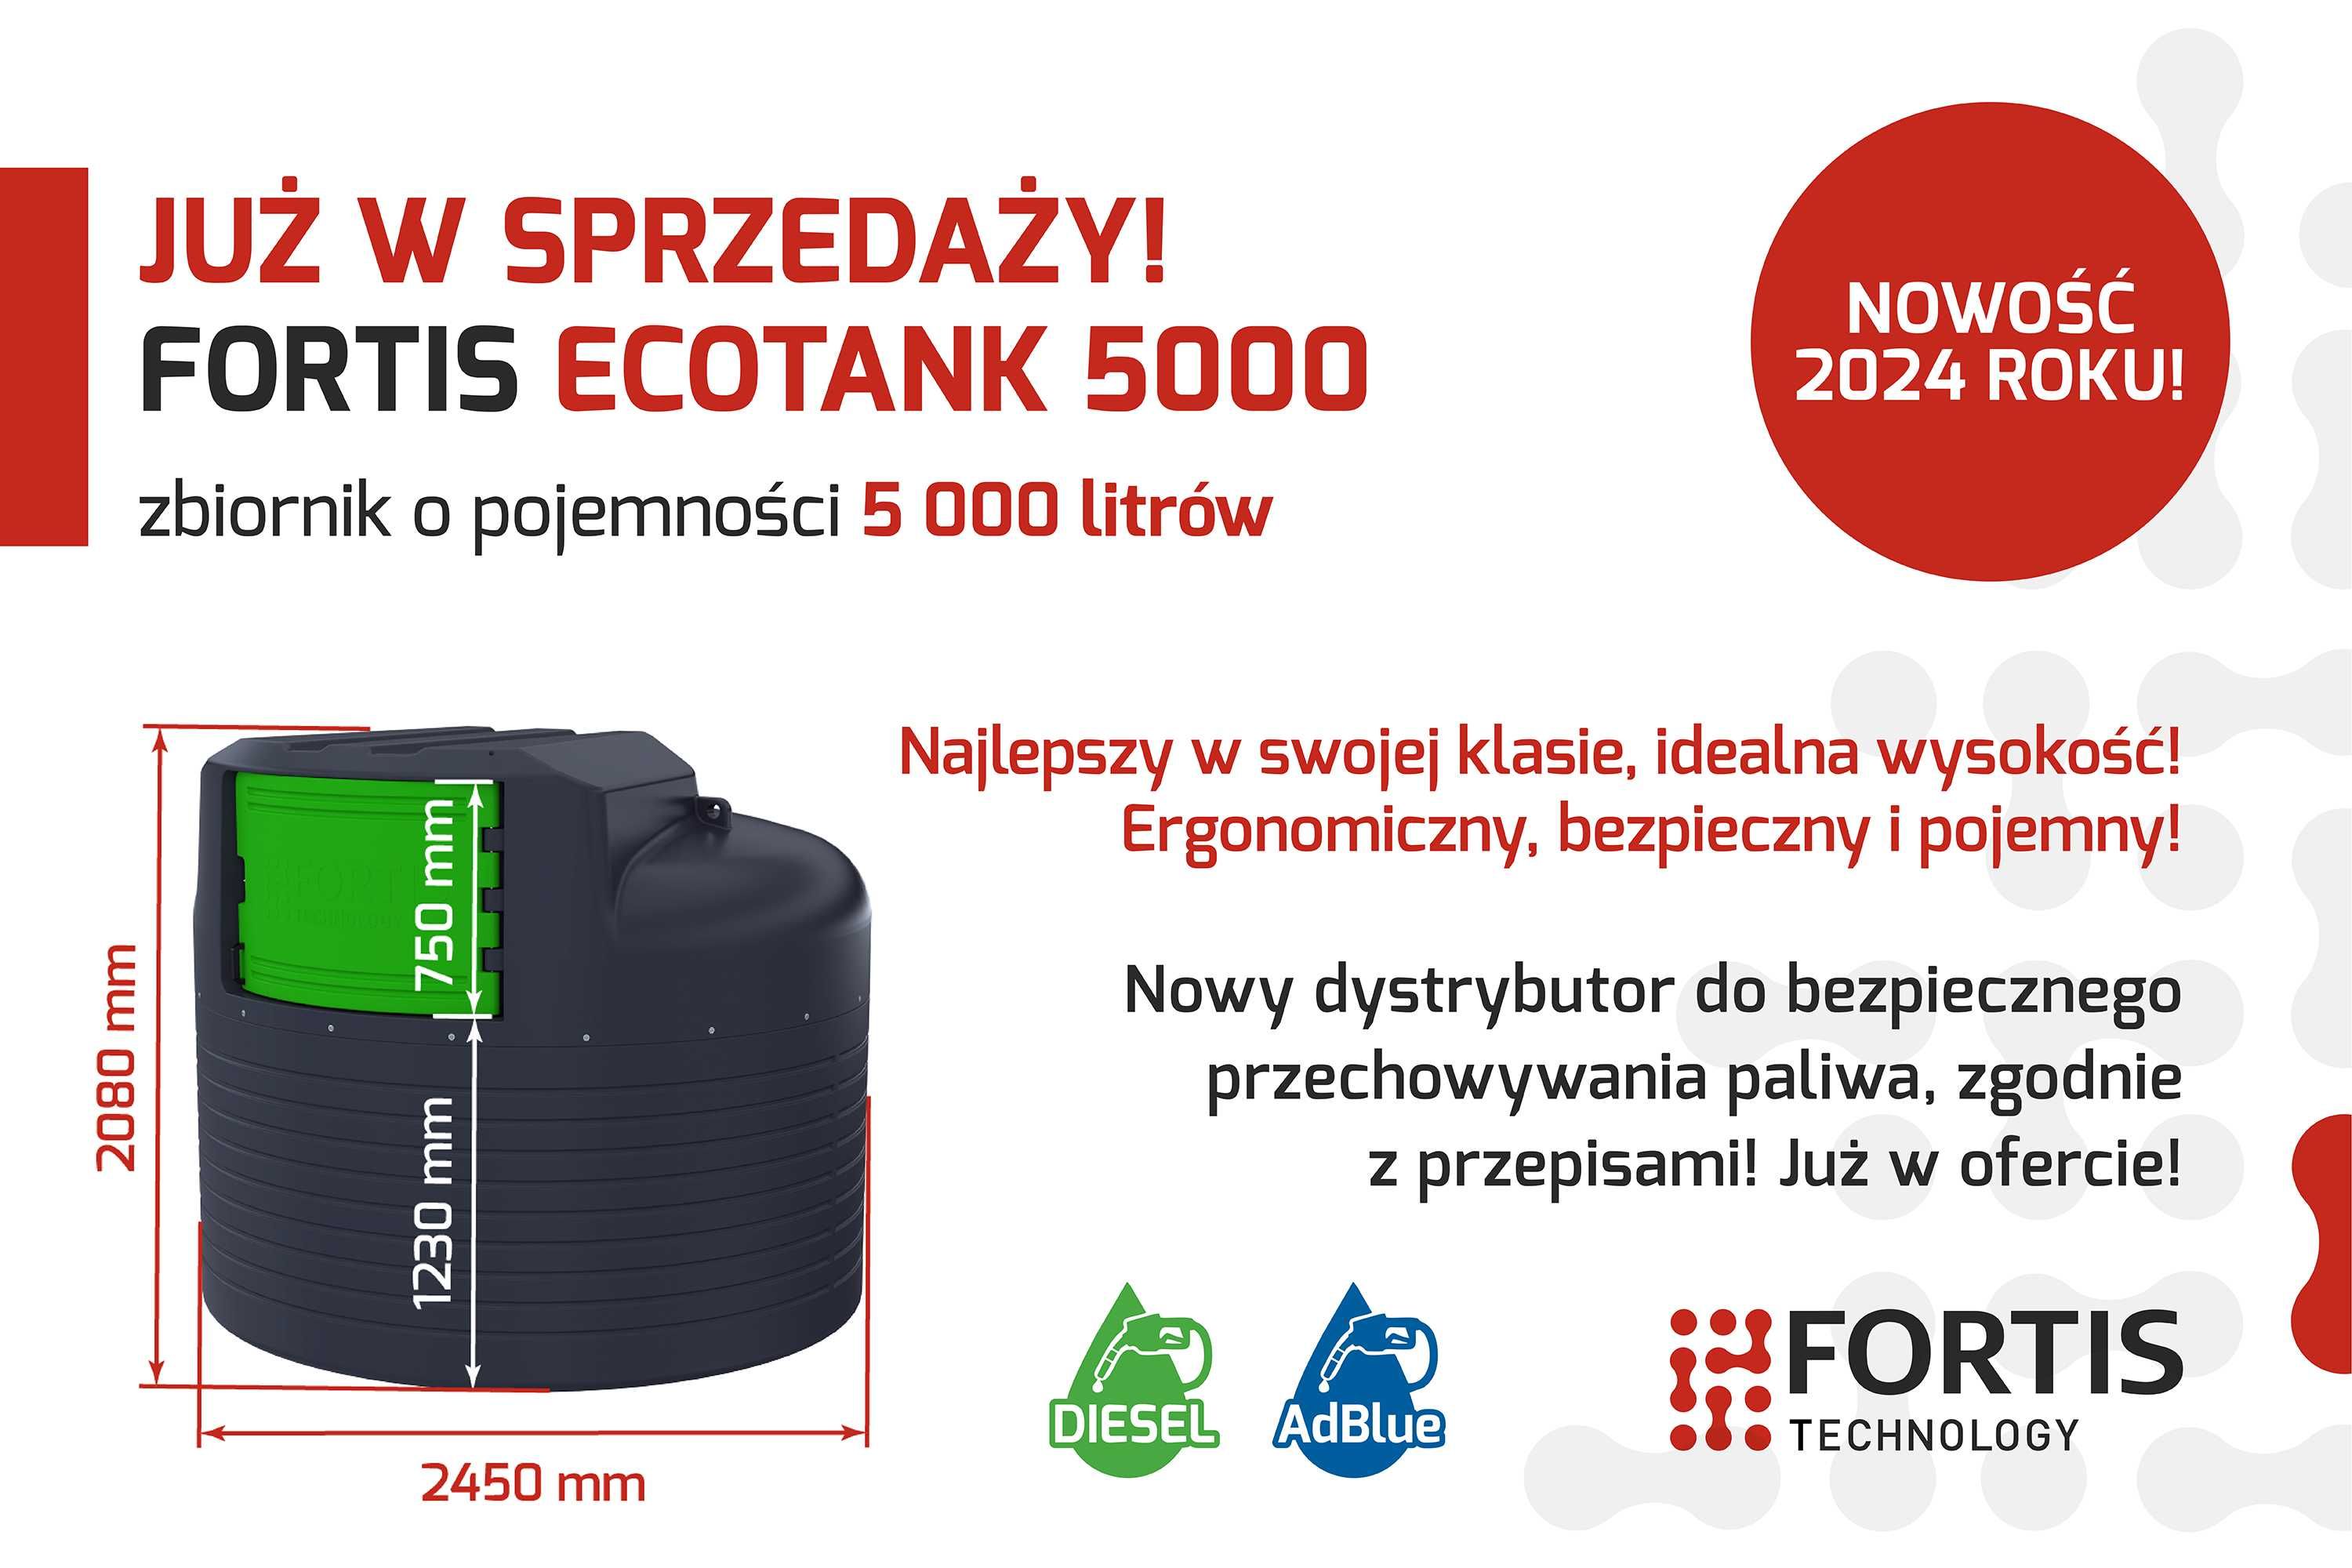 Zbiornik do paliwa Fortis olej napędowy 5000 l Ecotank promocja